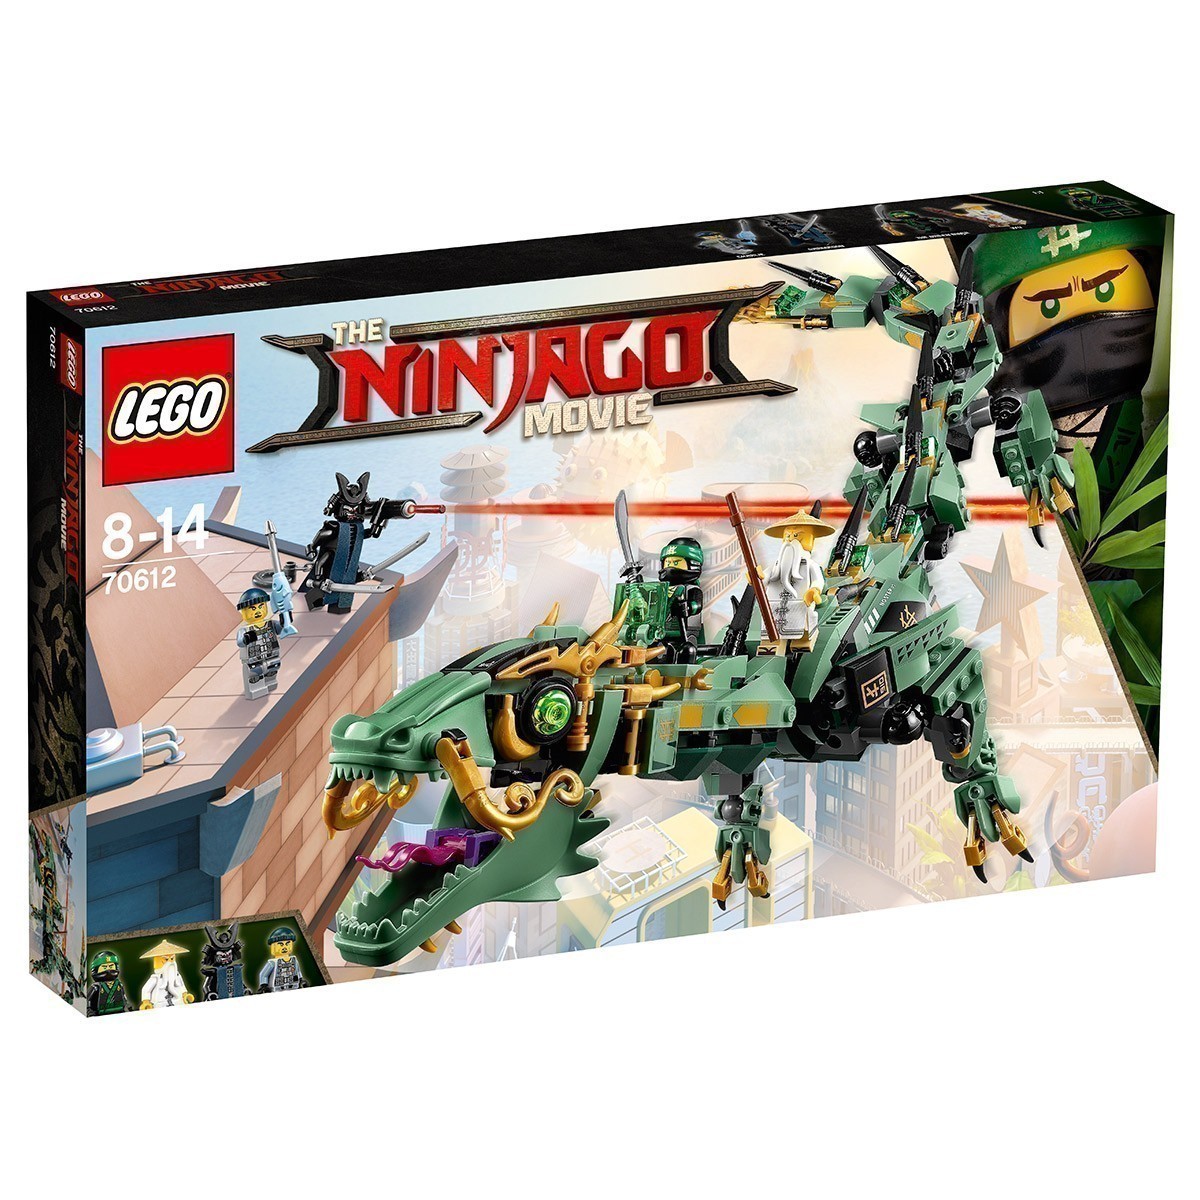 LEGO - The Ninjago Movie 70612 - Green Ninja Mech Dragon